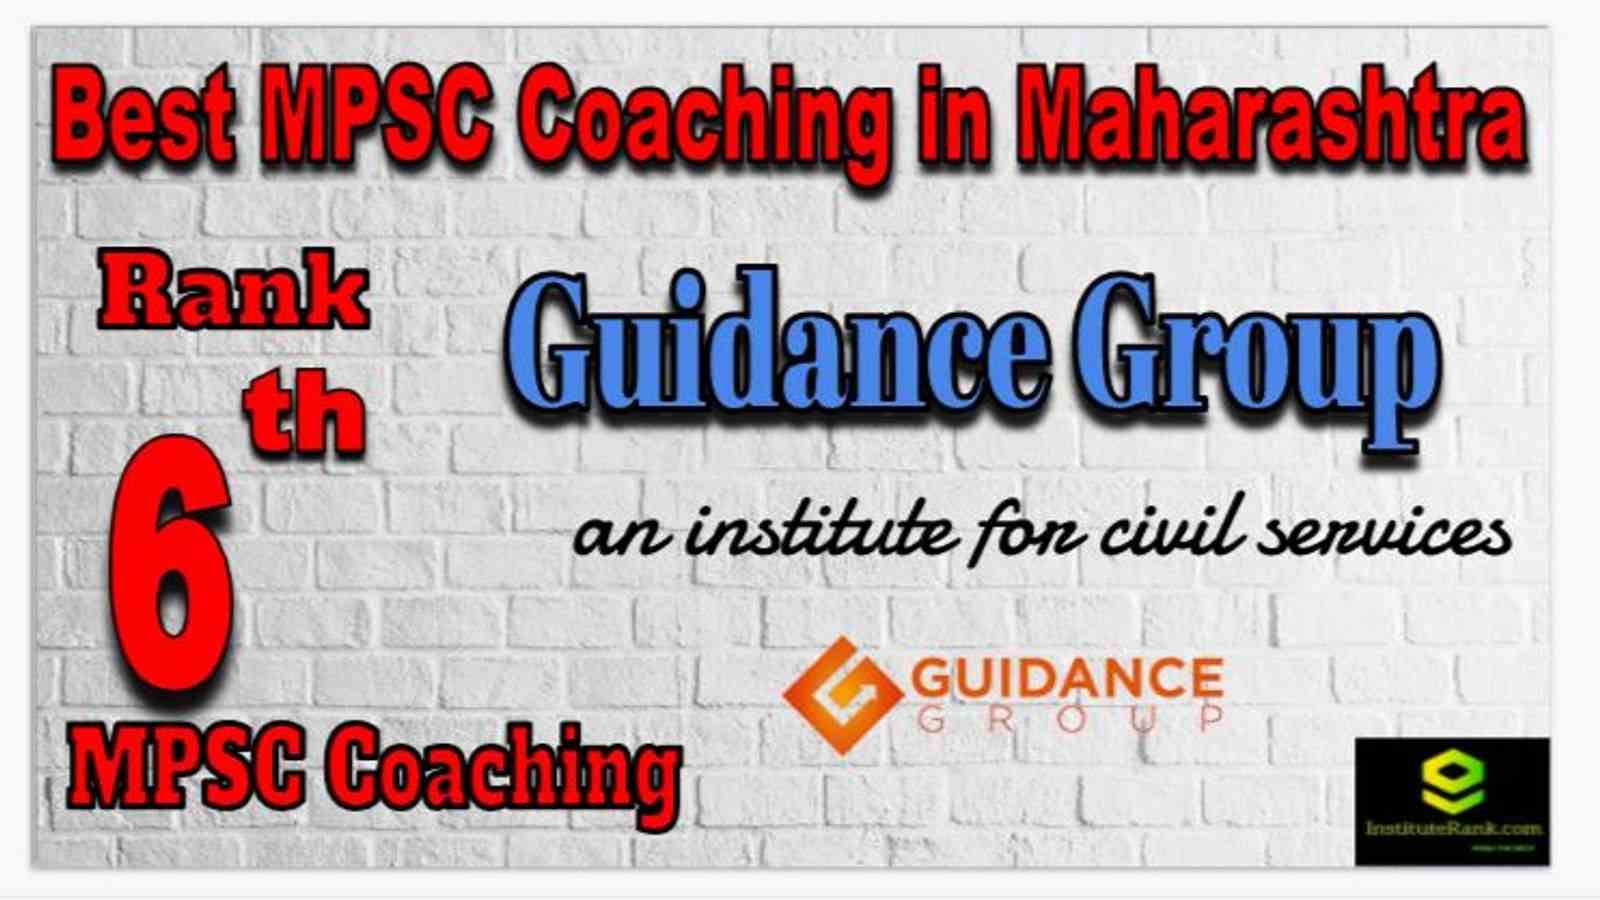 Rank 6 Best MPSC Coaching in Maharashtra